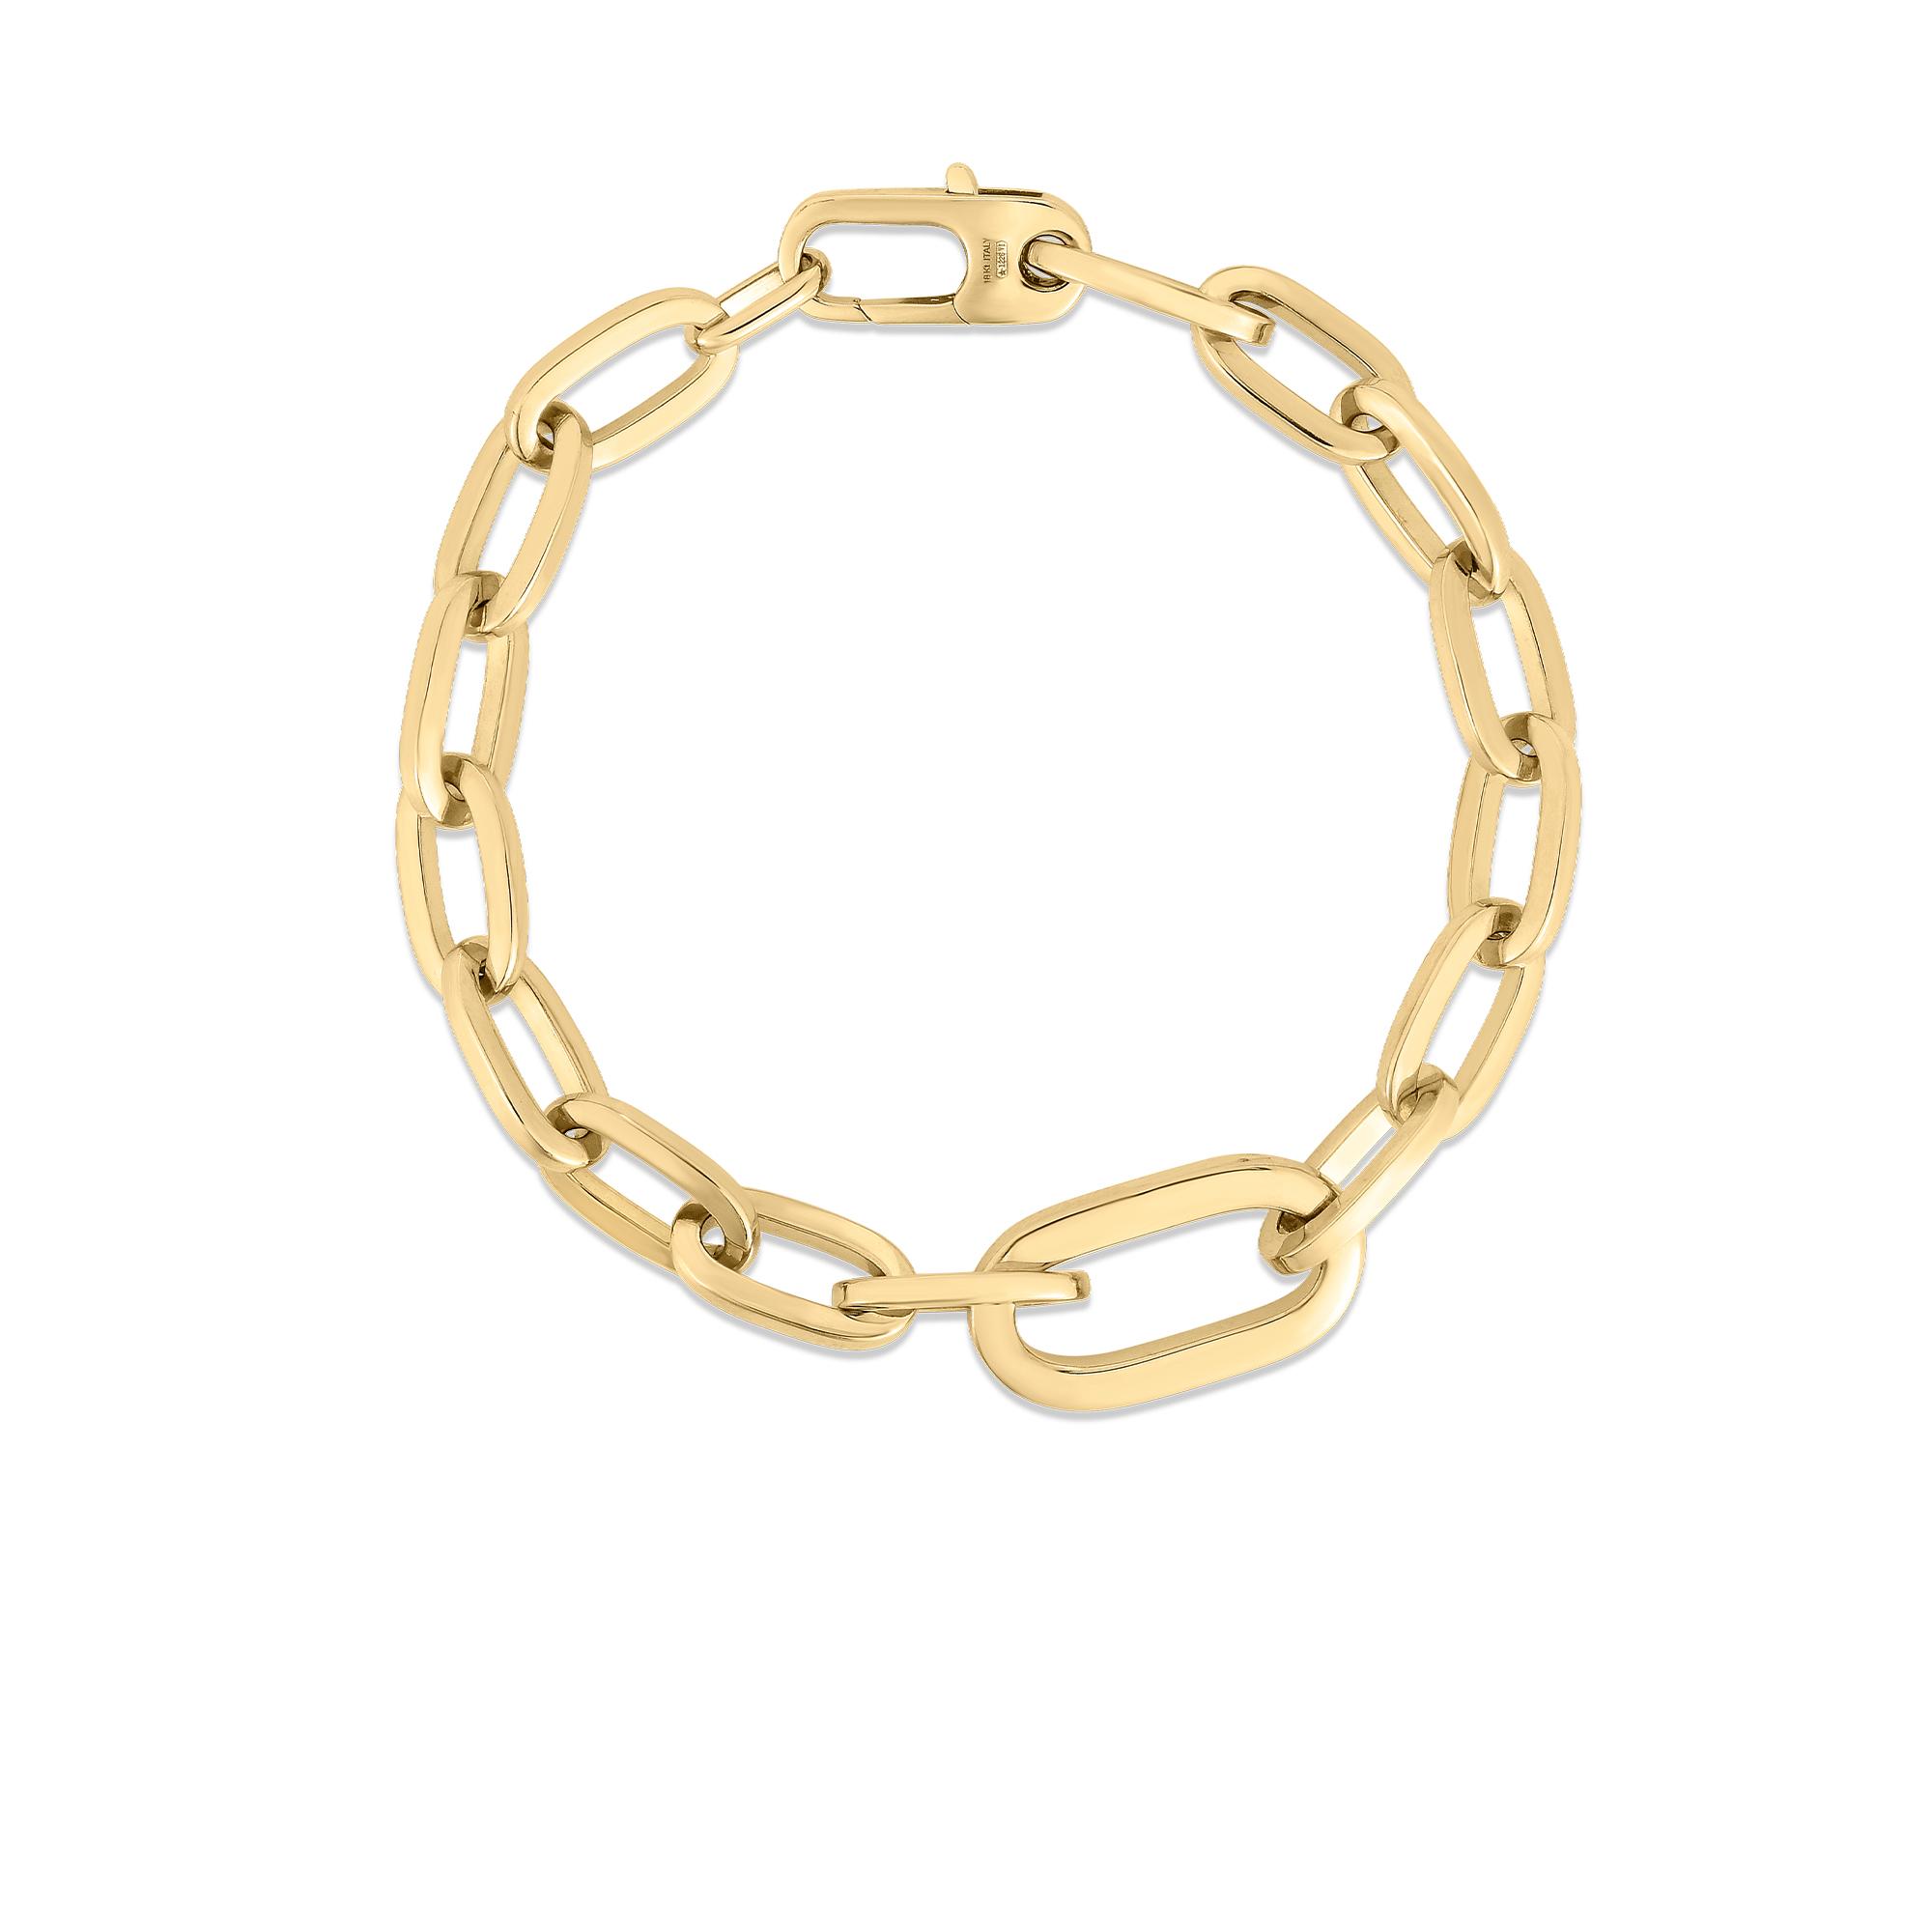 Roberto Coin Designer Gold Paperclip Bracelet with Large Center Link 0